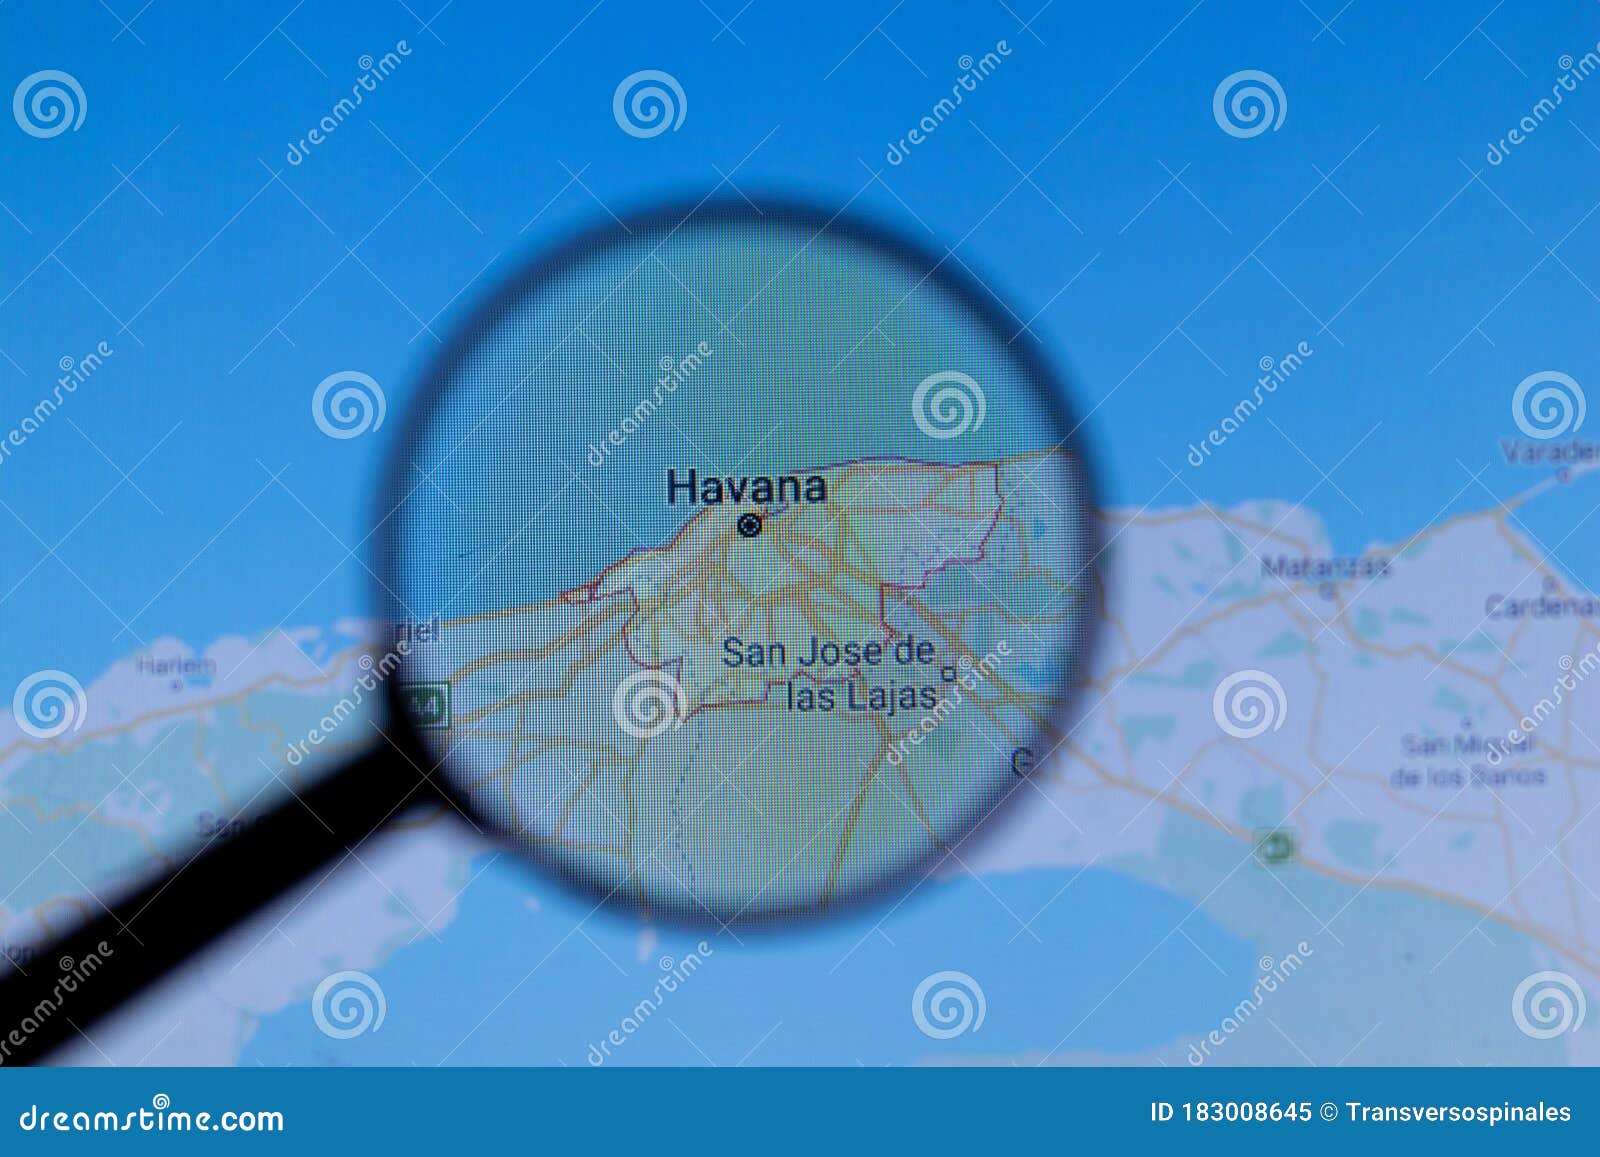 Los Angeles California Usa 1 May 2020 Havana City Town Name With Location On Map Close Up Illustrative Editorial Stock Image Image Of Symbol Havana 183008645 - havana roblox id 2020